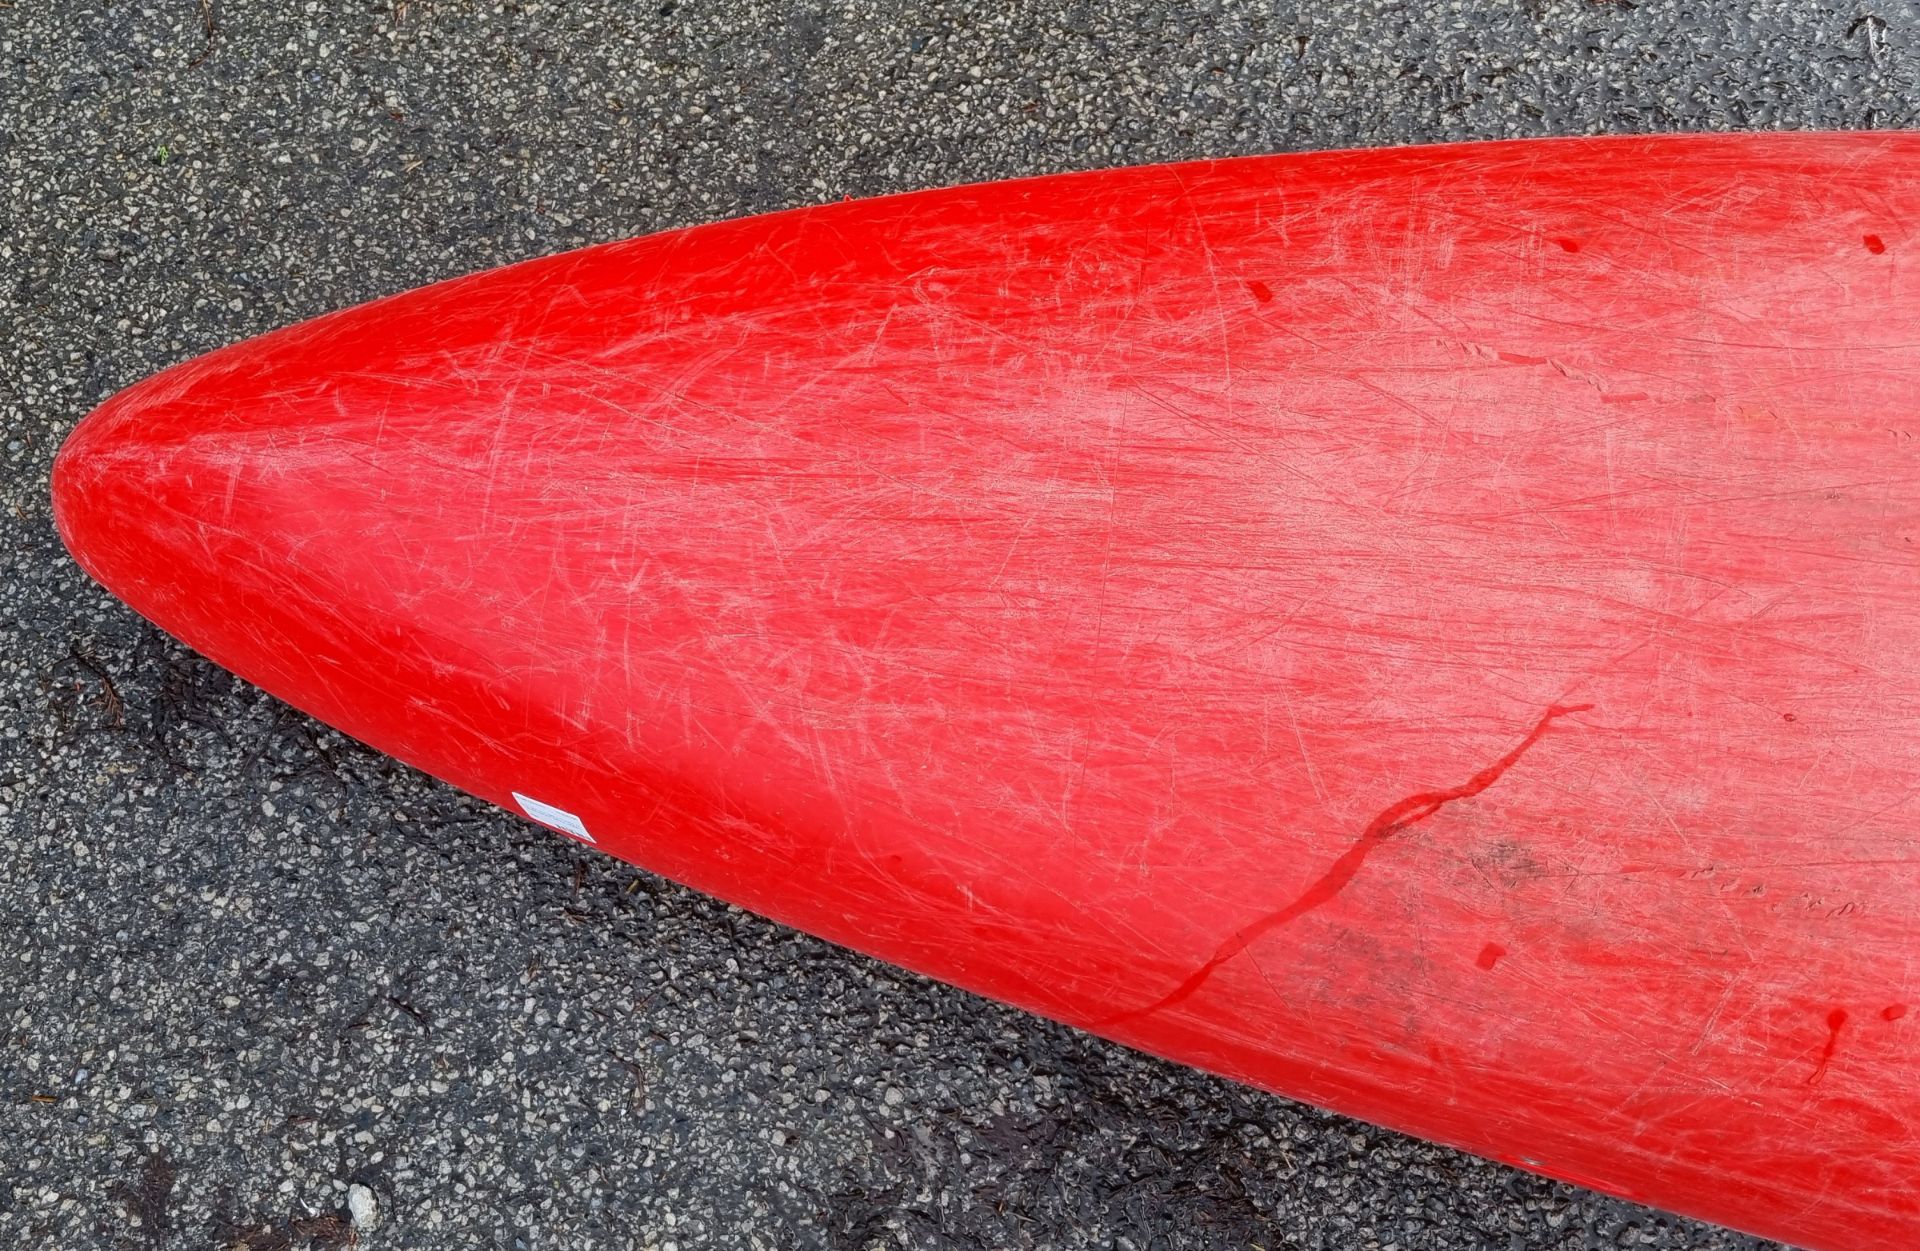 Dagger Katana polyethylene kayak - red - W 3200 x D 660 x H 420mm - Image 7 of 9